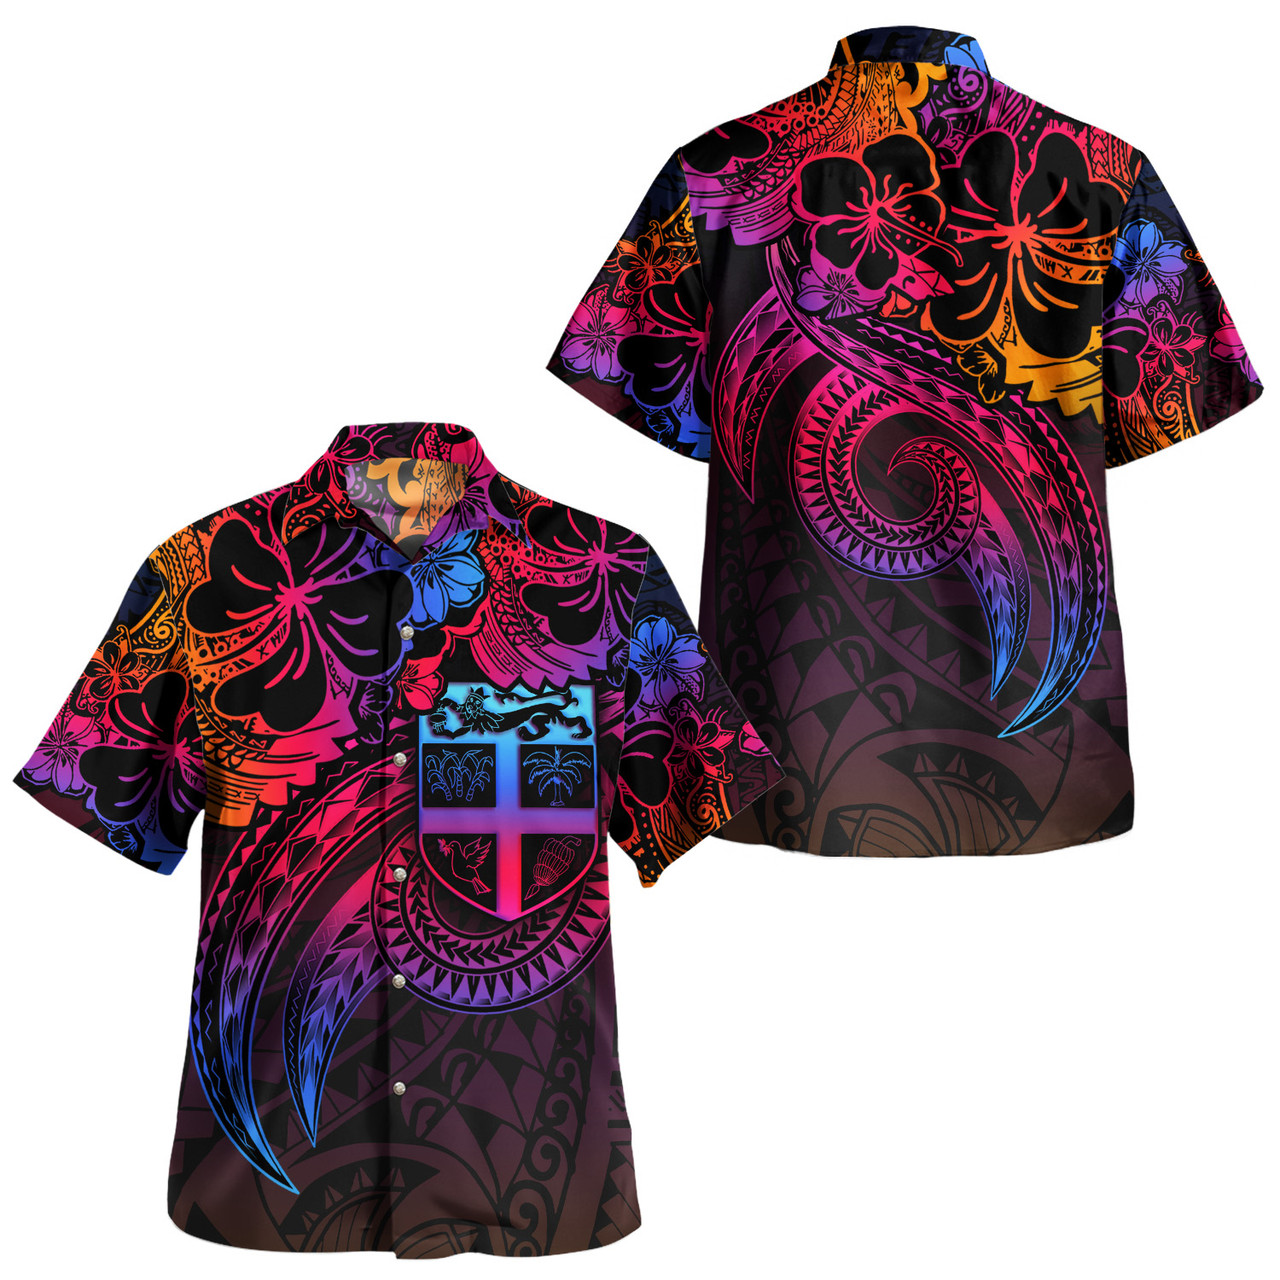 Fiji Combo Puletasi And Shirt Rainbow Style